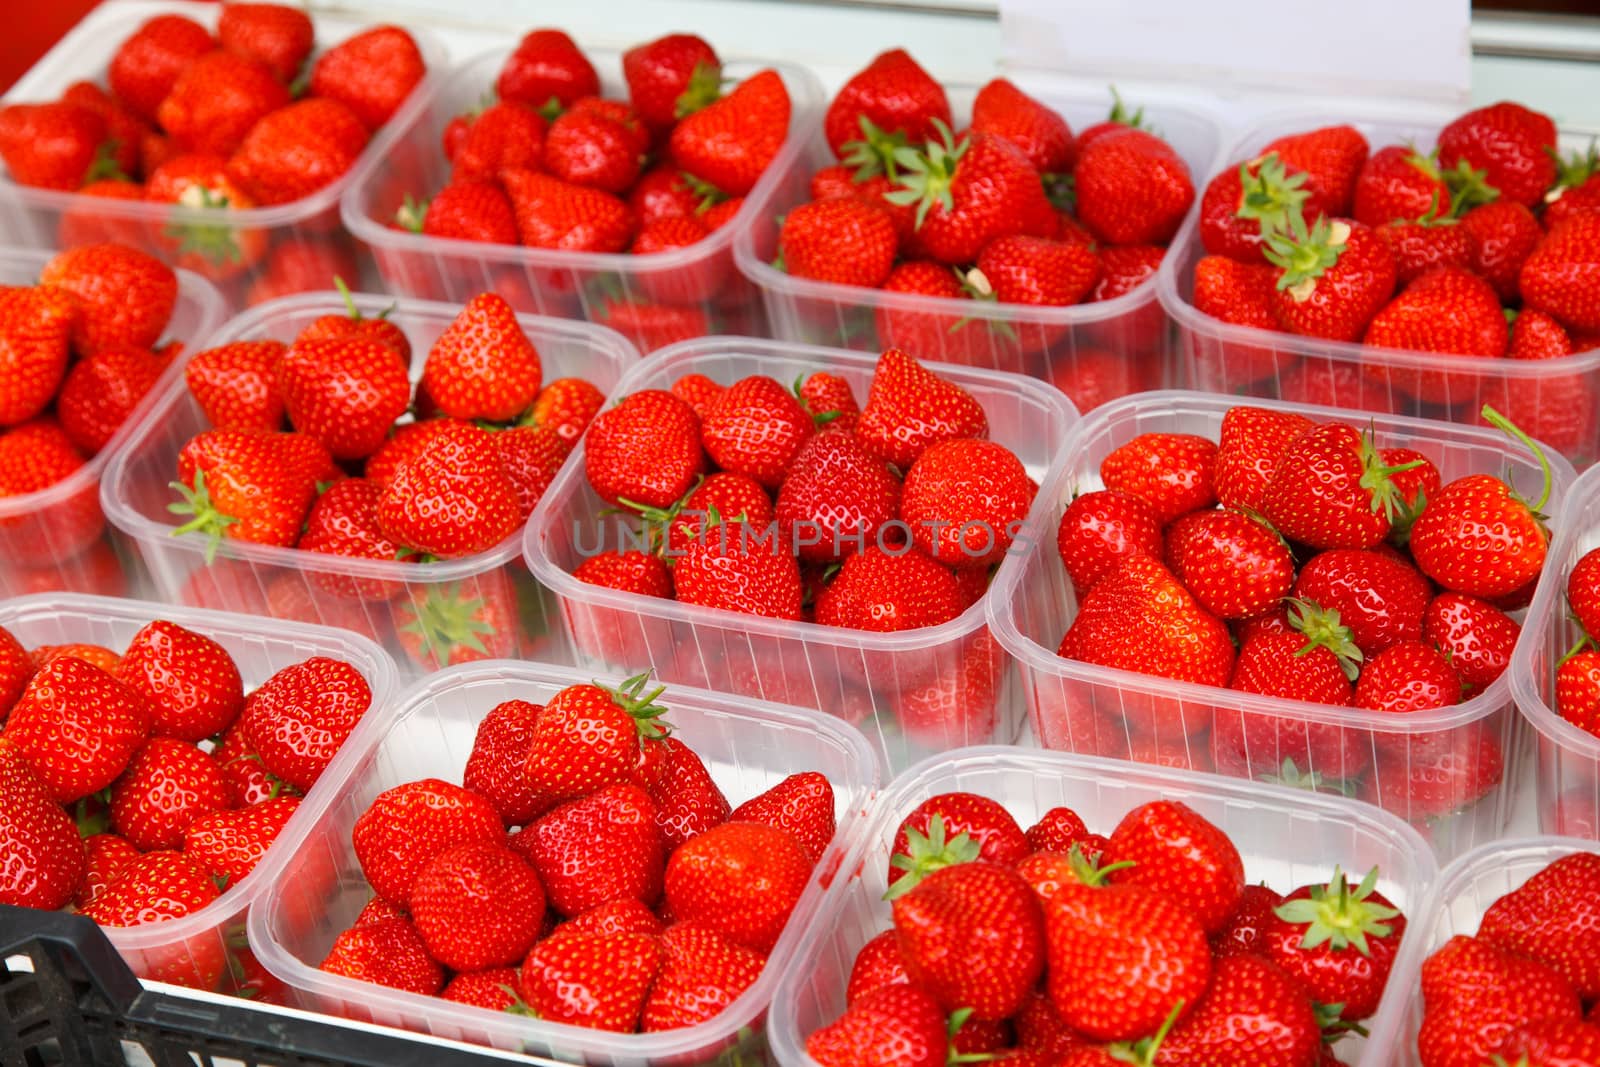 Fresh strawberries by naumoid